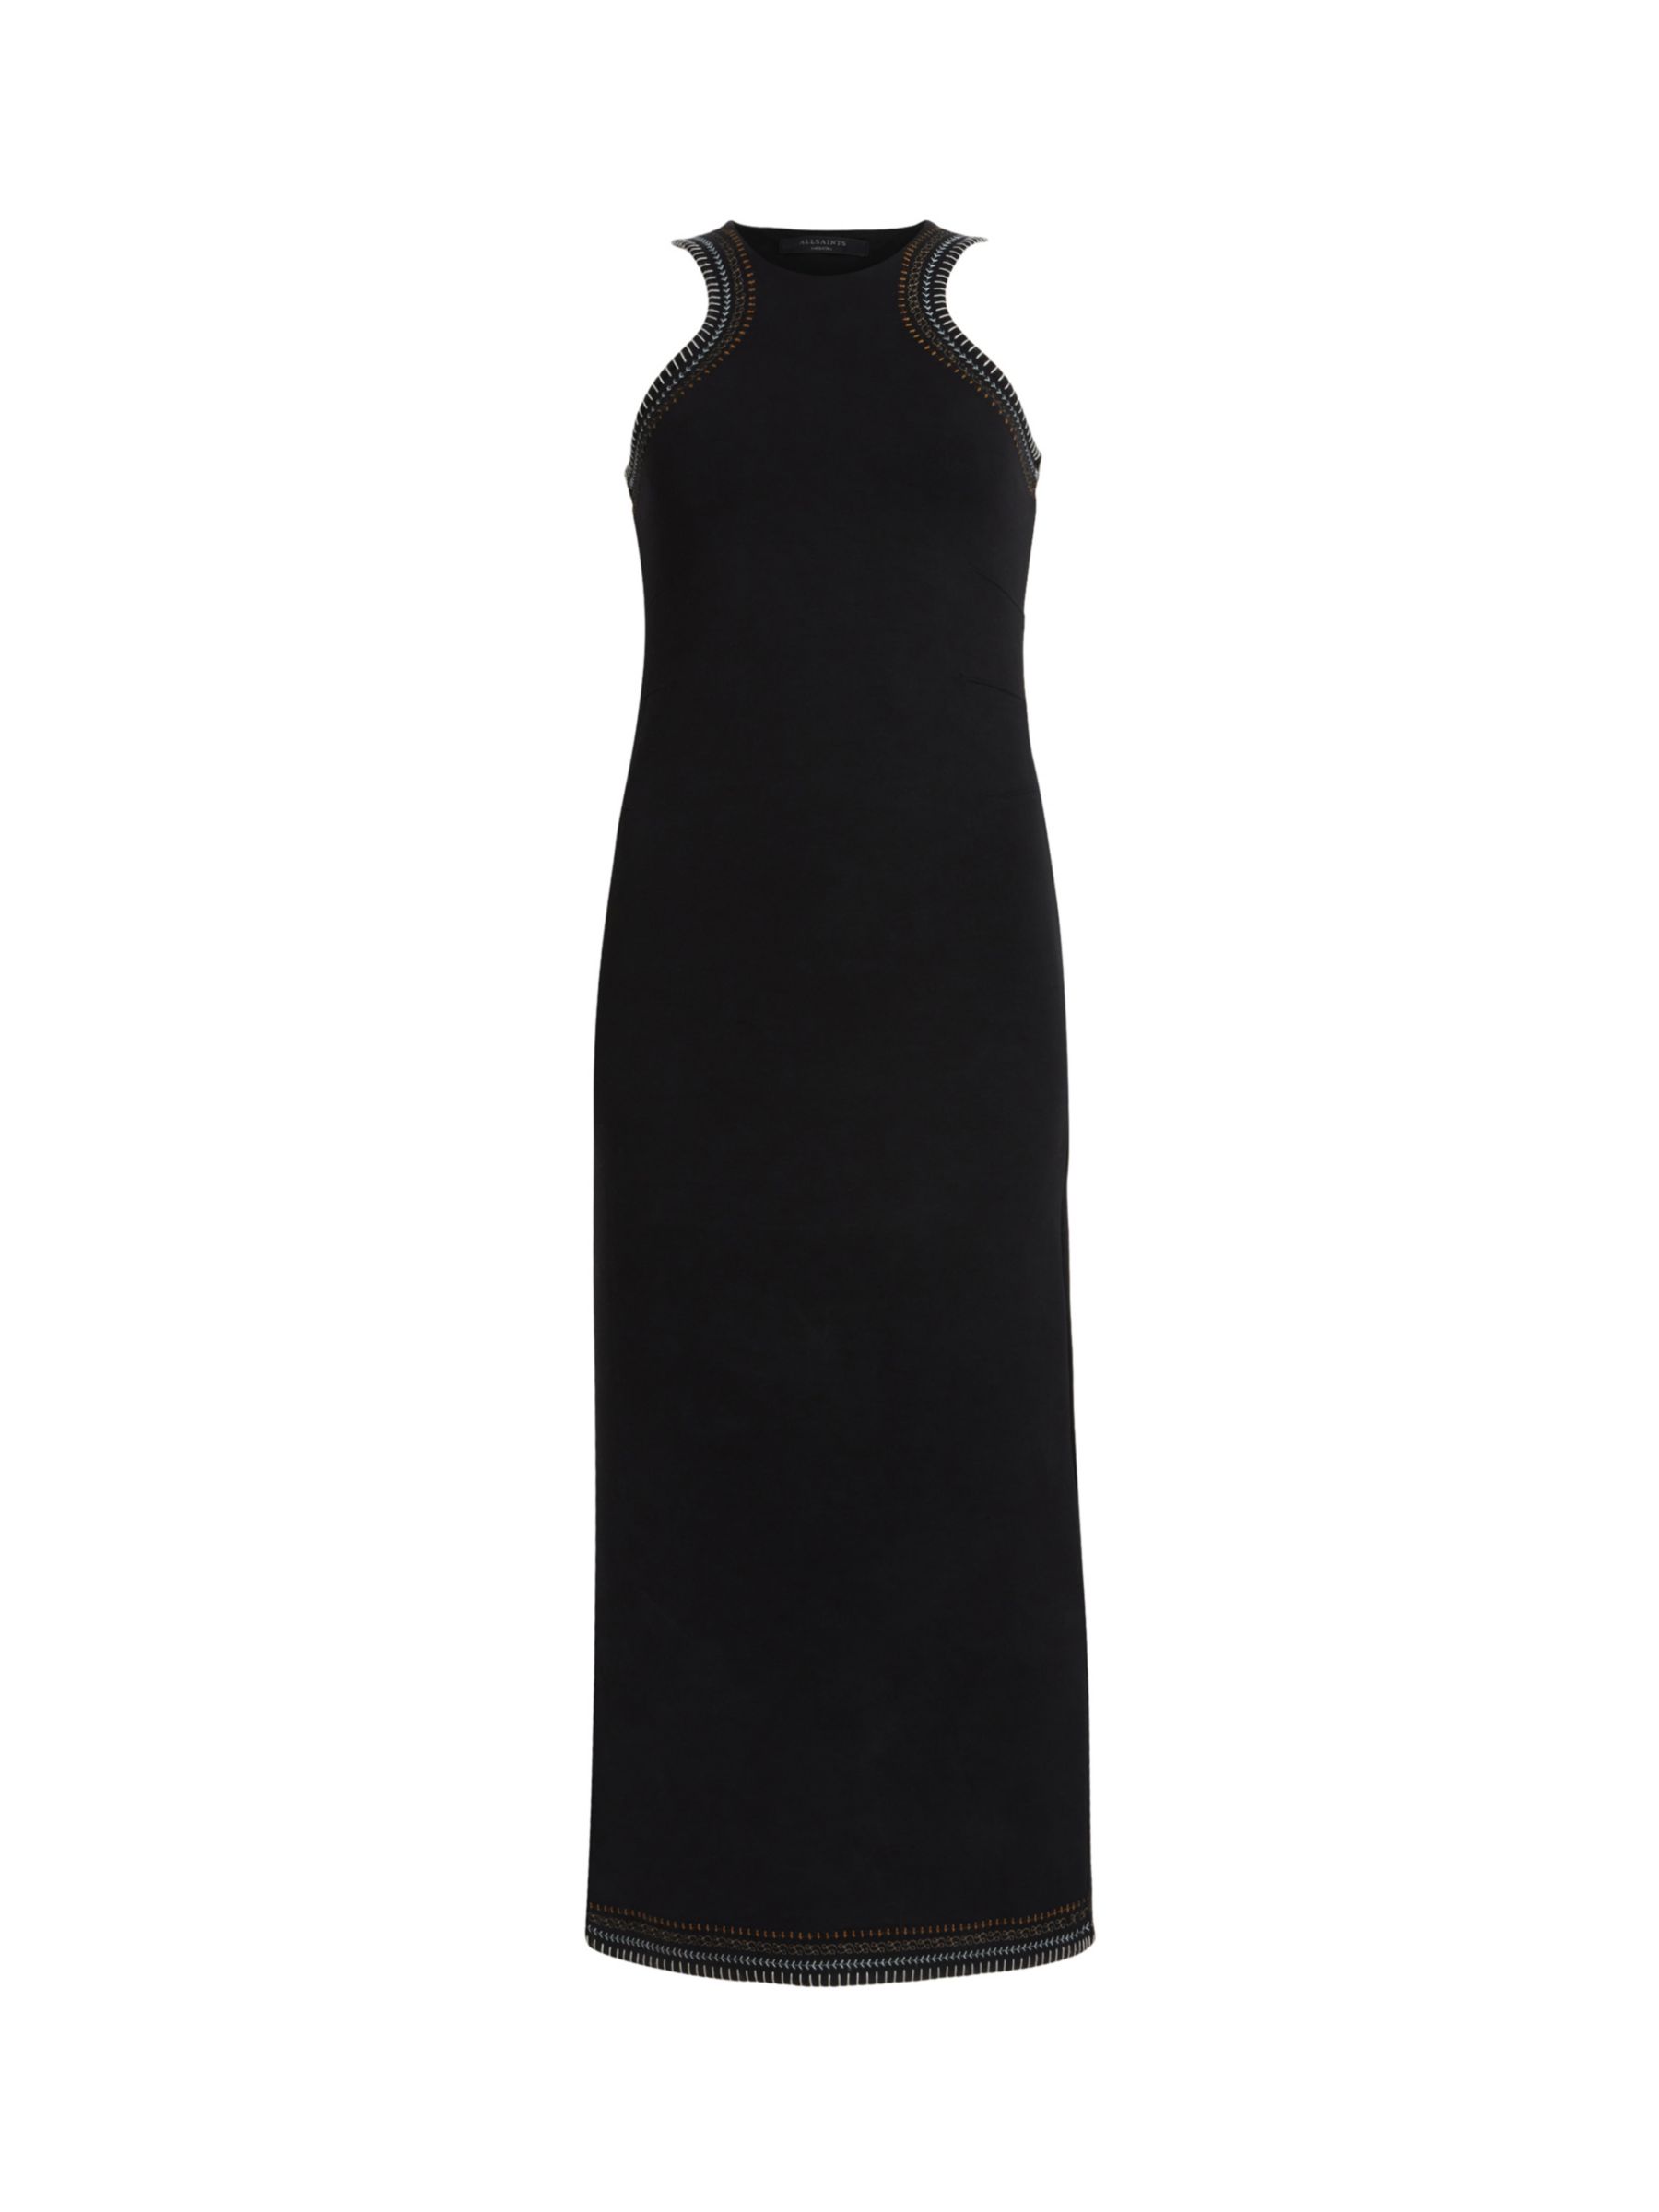 AllSaints Mako Crochet Bodycon Dress, Black, 10